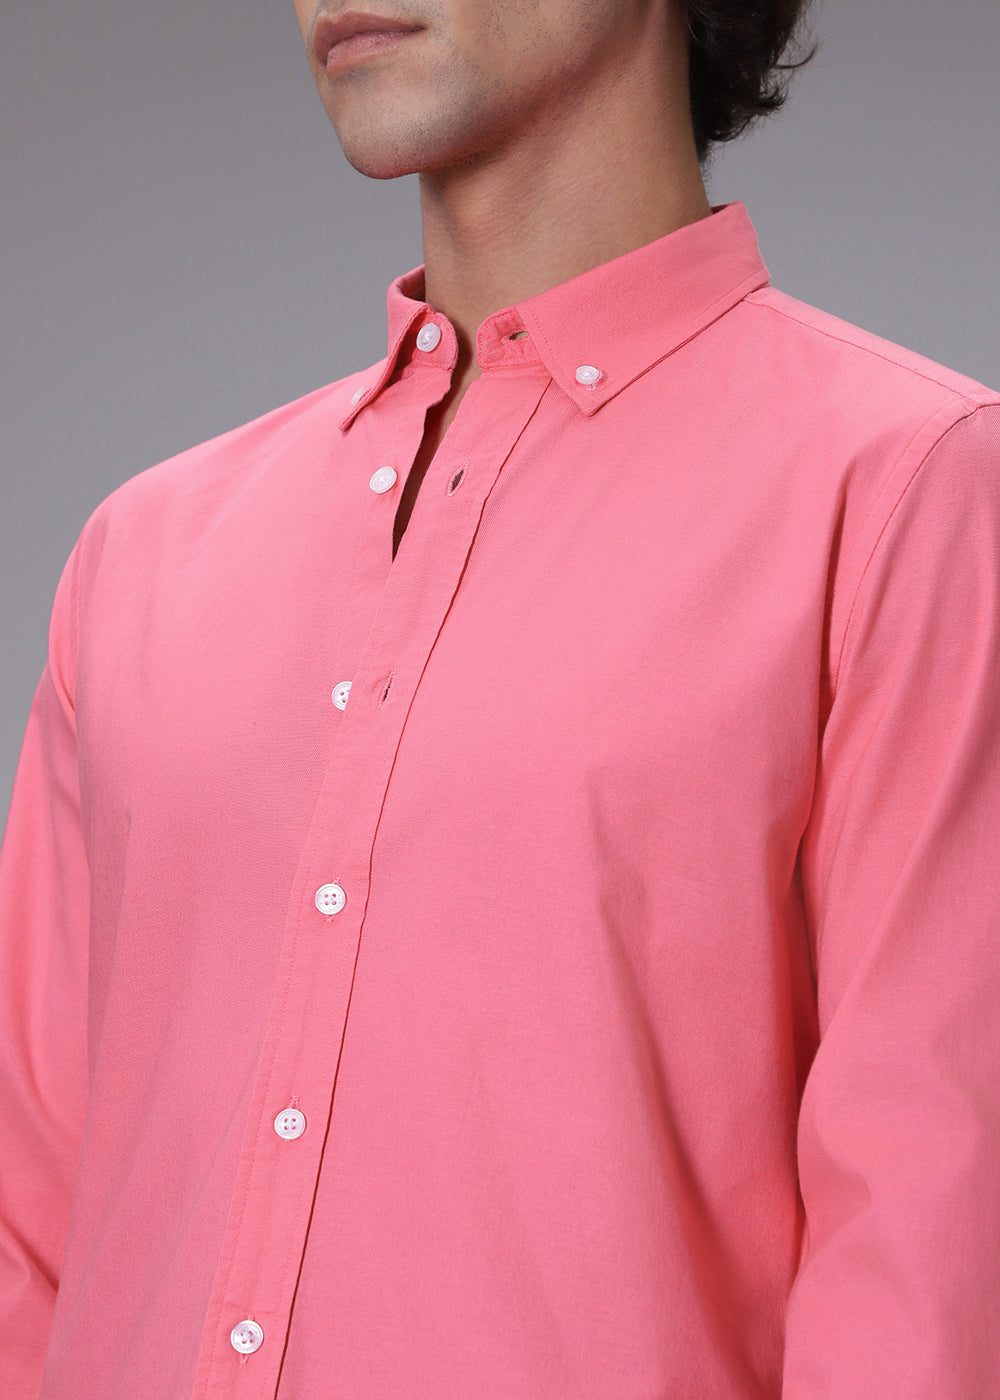 Knockout Pink Oxford Shirt